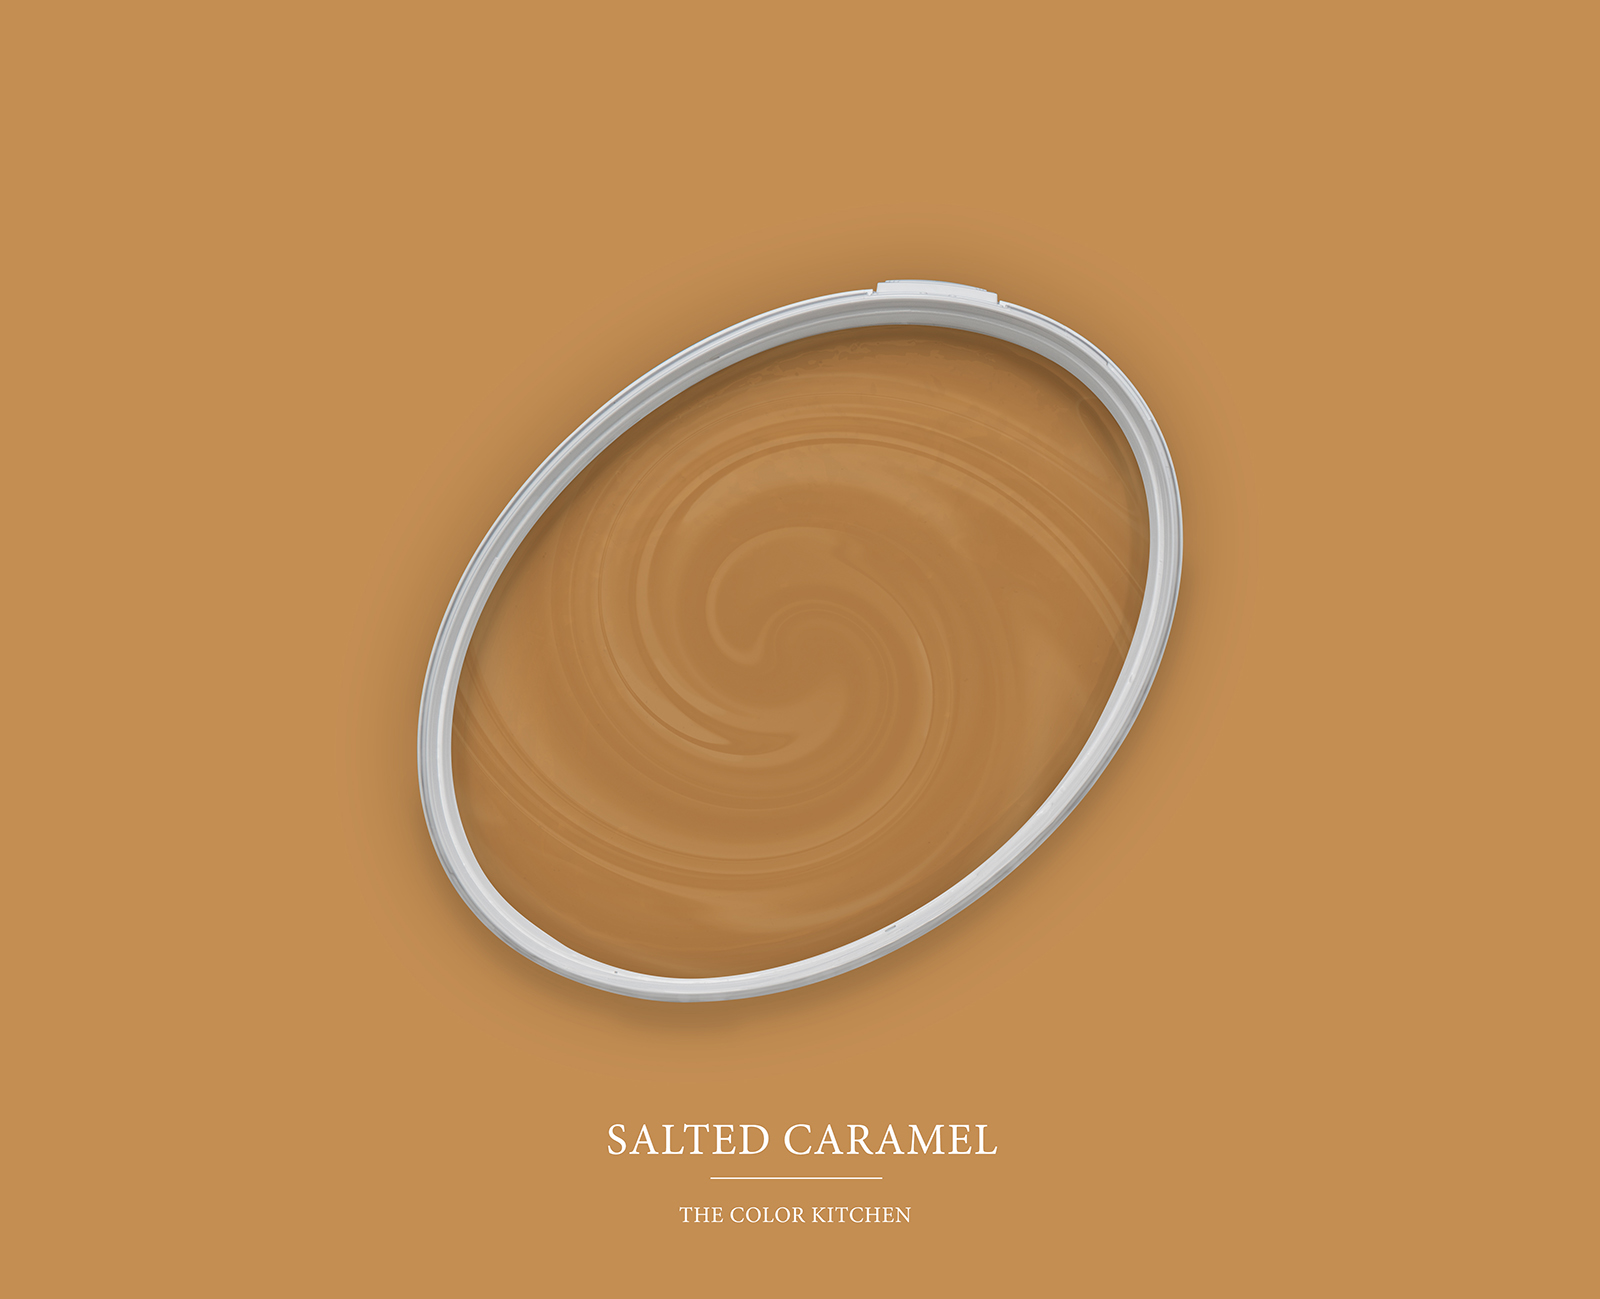         Wandfarbe TCK5007 »Salted Caramel« in intensivem Caramel – 2,5 Liter
    